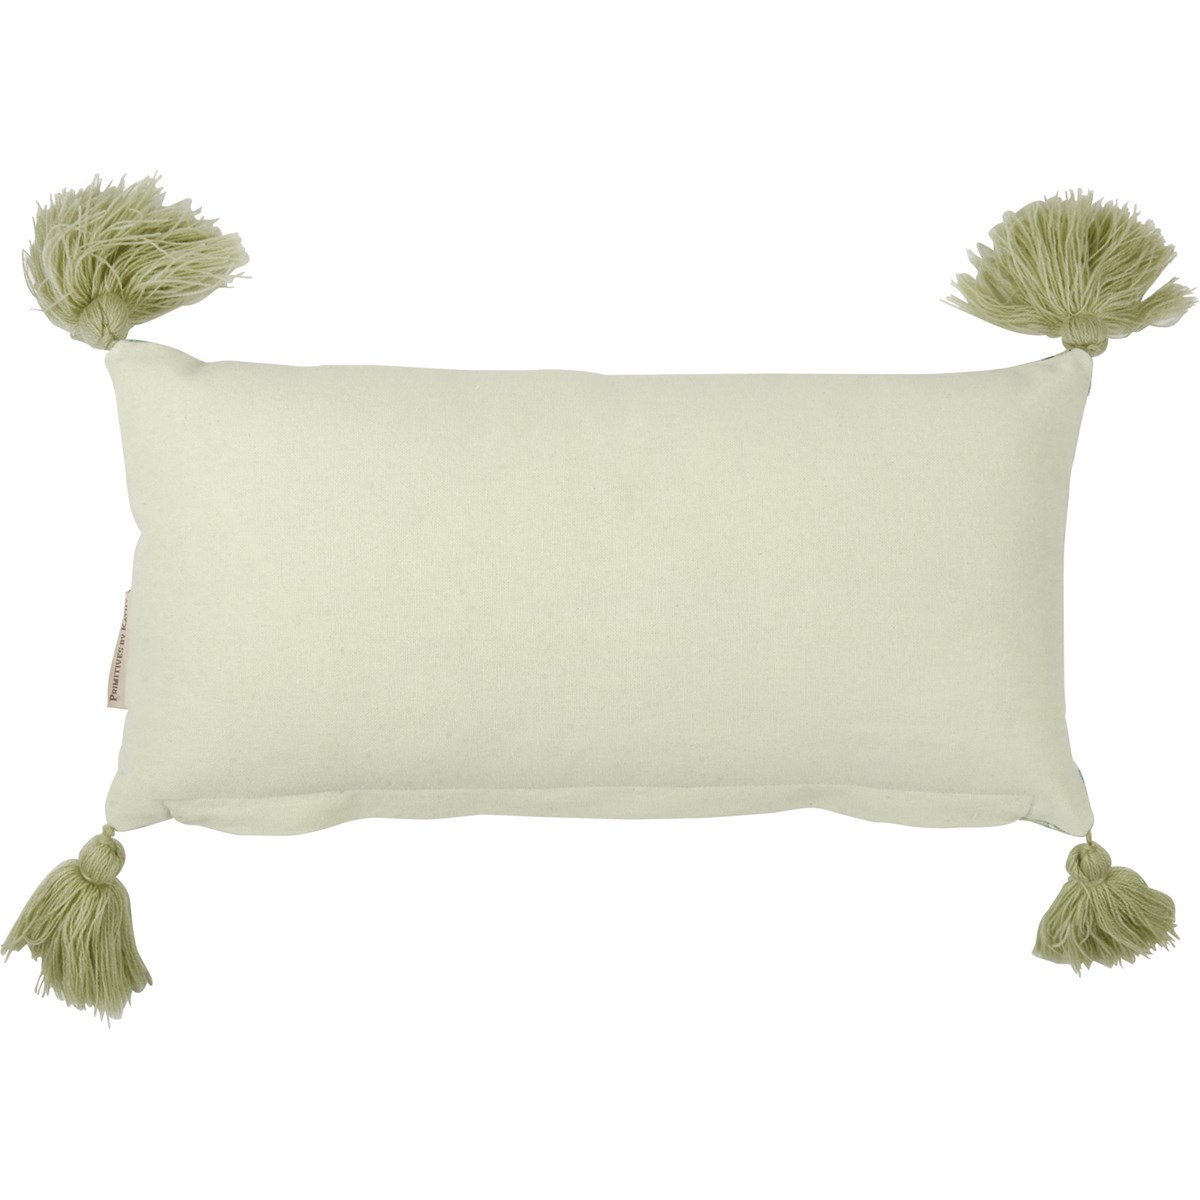 Spring Plaid Pillow - Cotton, Zipper